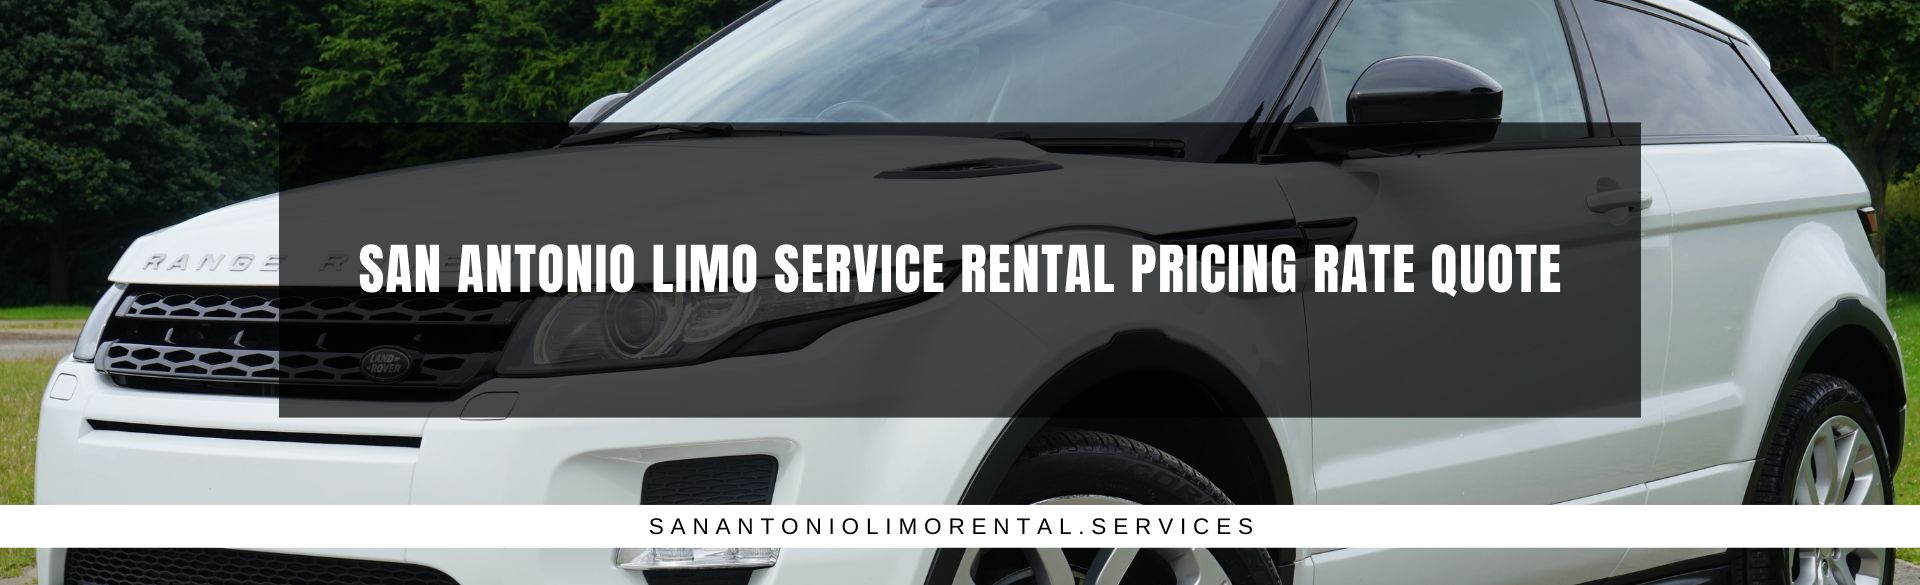 San Antonio Limo Service Rental Pricing Rate Quote